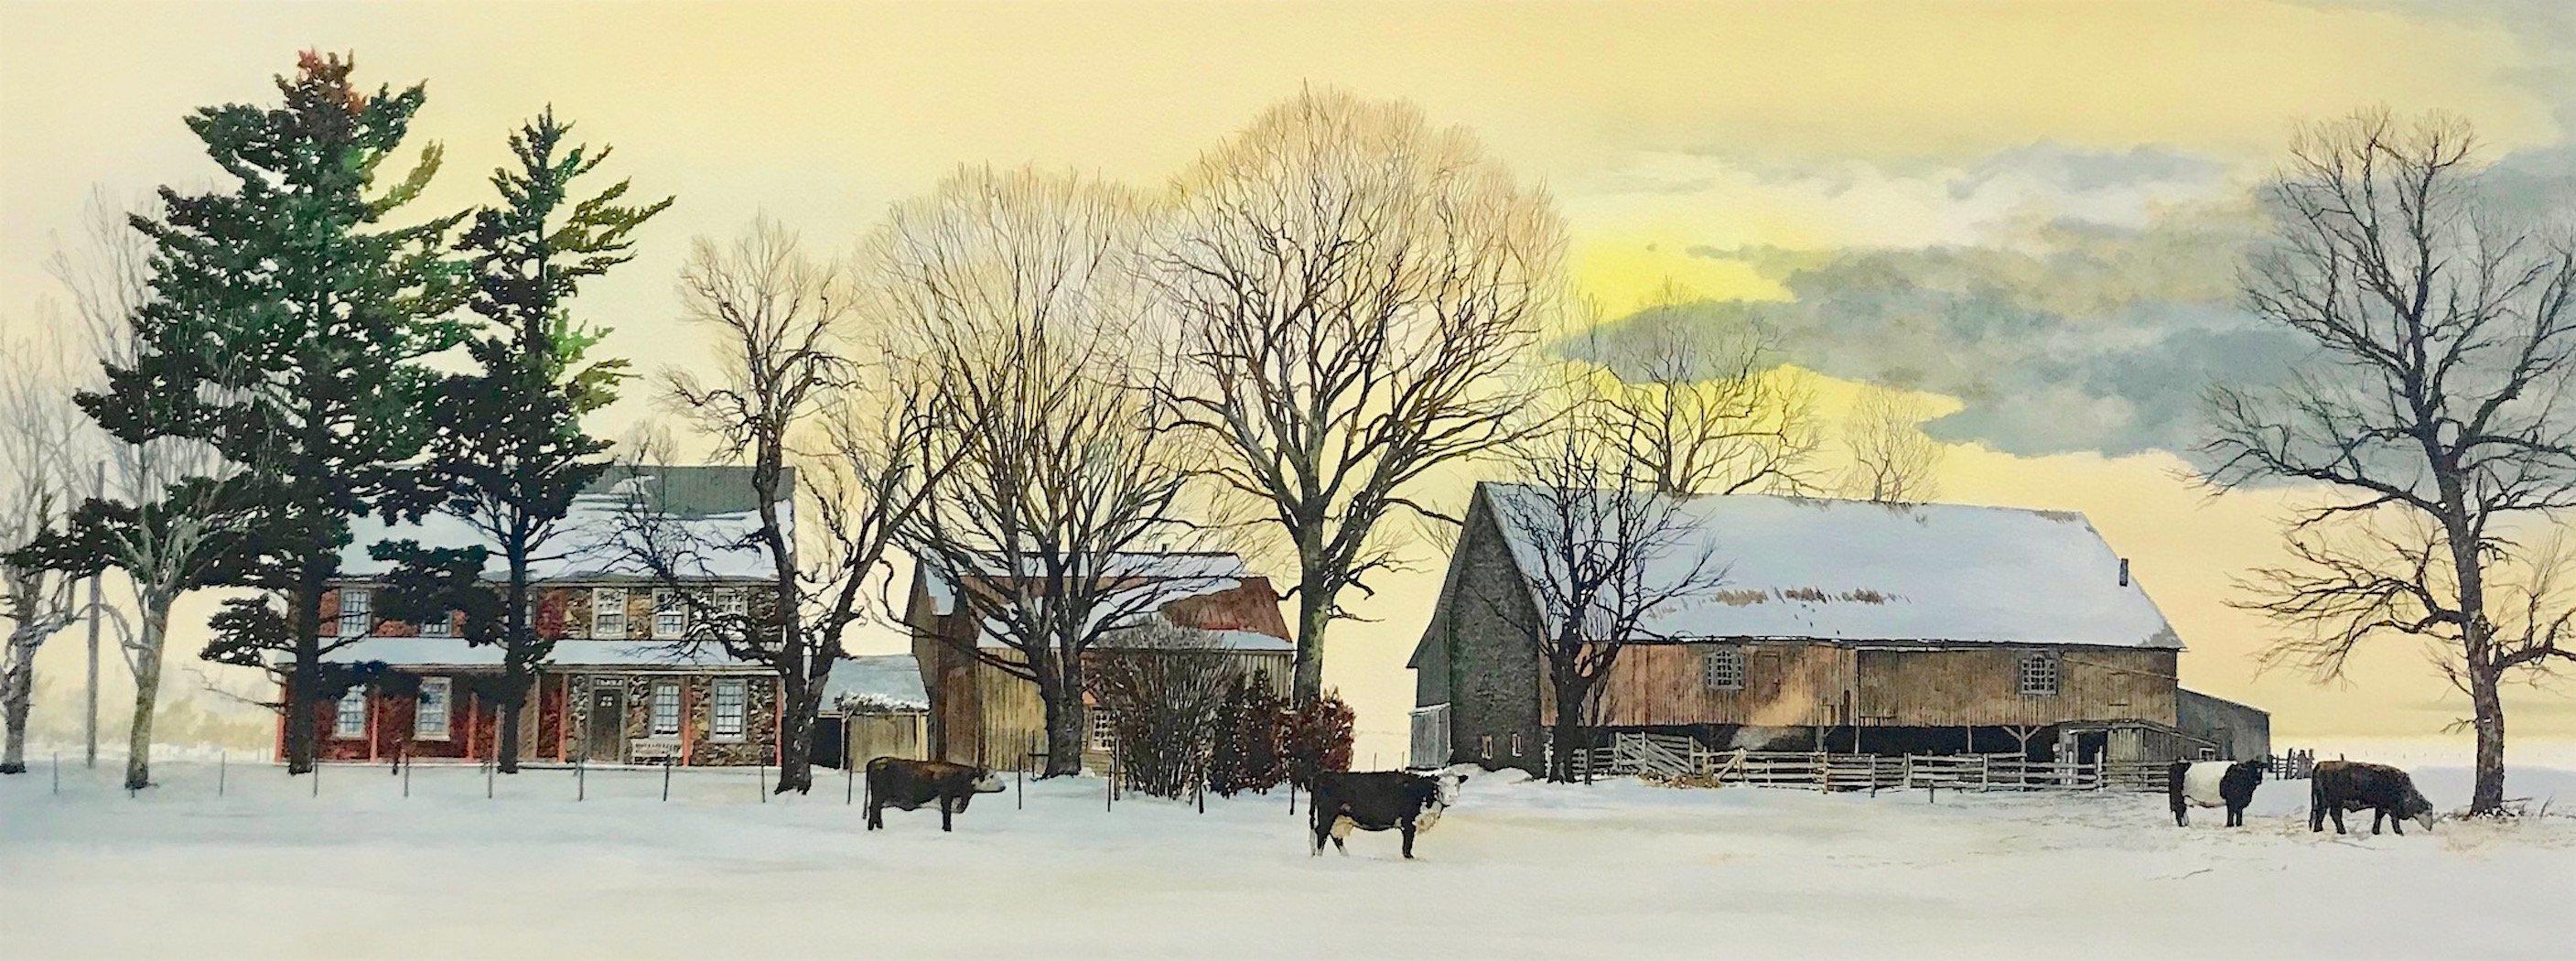 Peter Sculthorpe Landscape Print - Backland, Hand Drawn Lithograph, Winter Landscape Bucks County, Stone Farmhouse